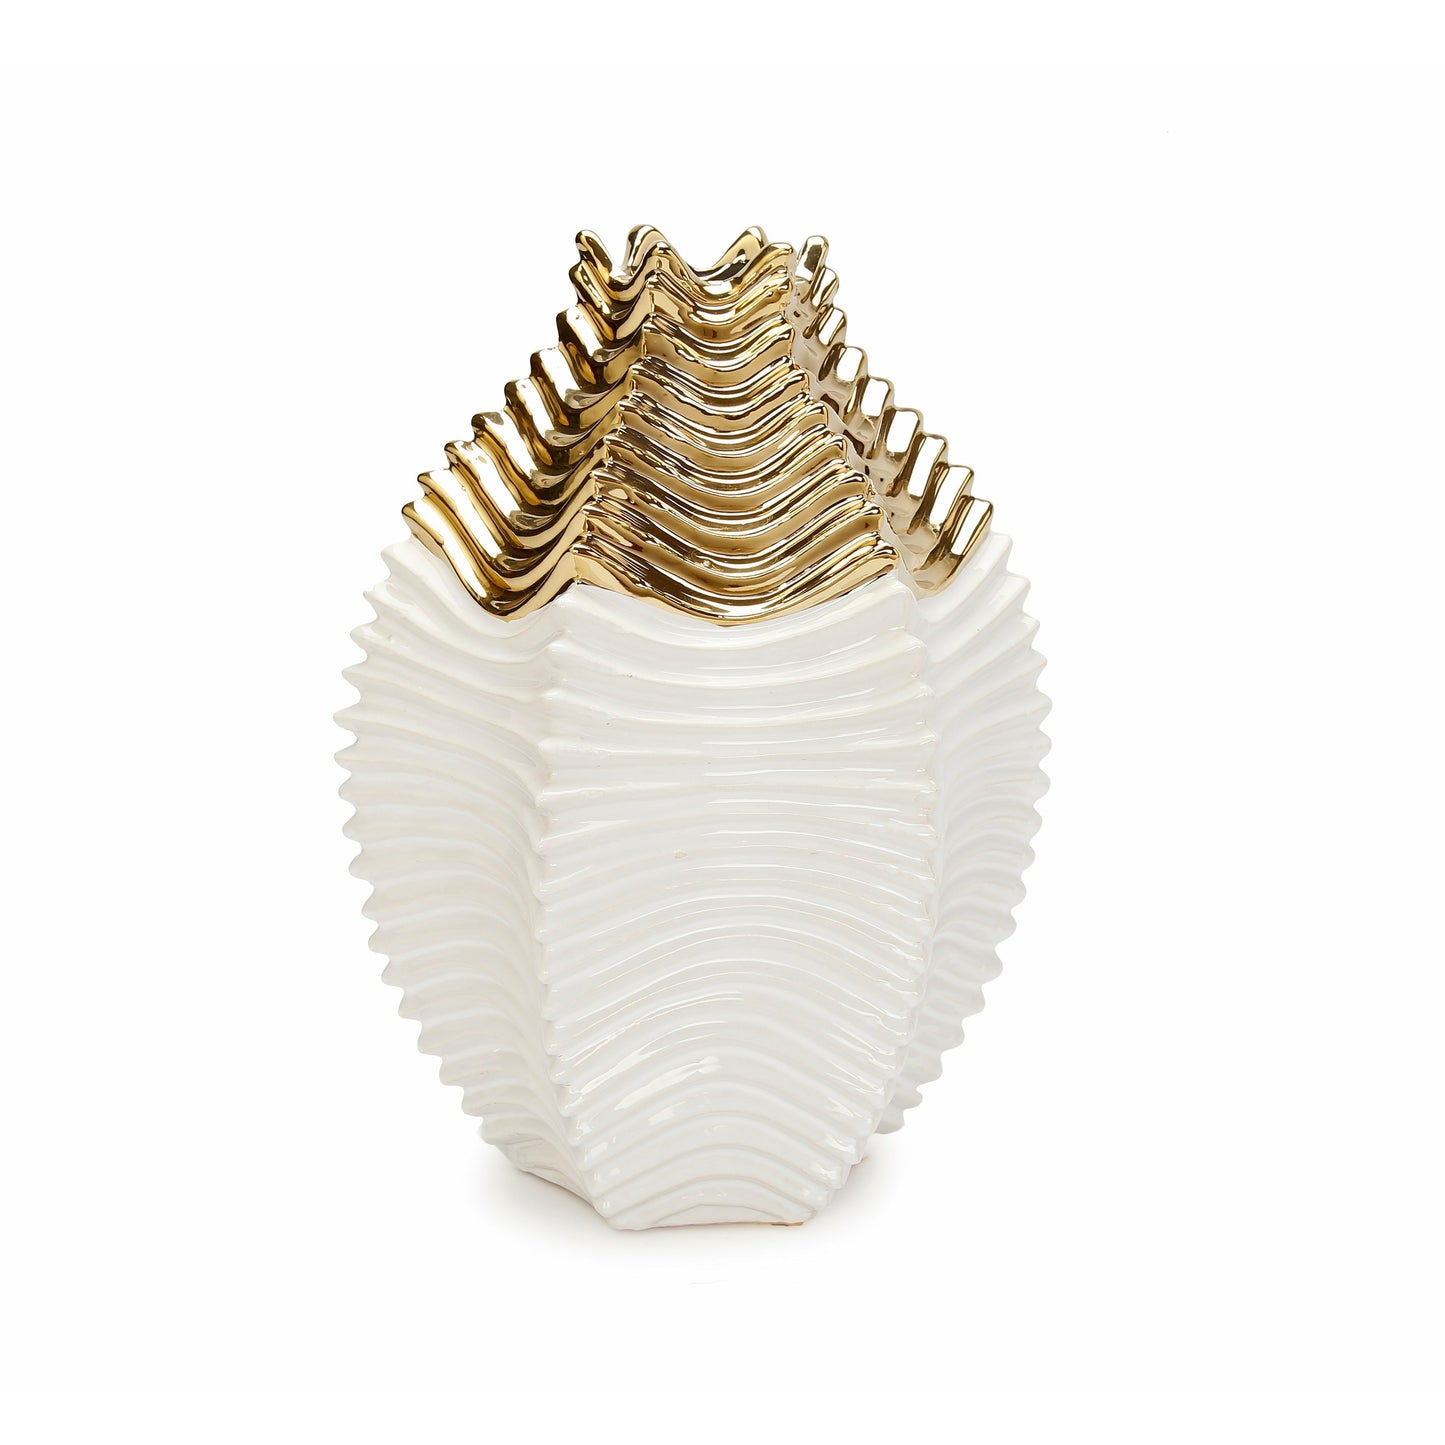 White and Gold Oval Porcelain Vase